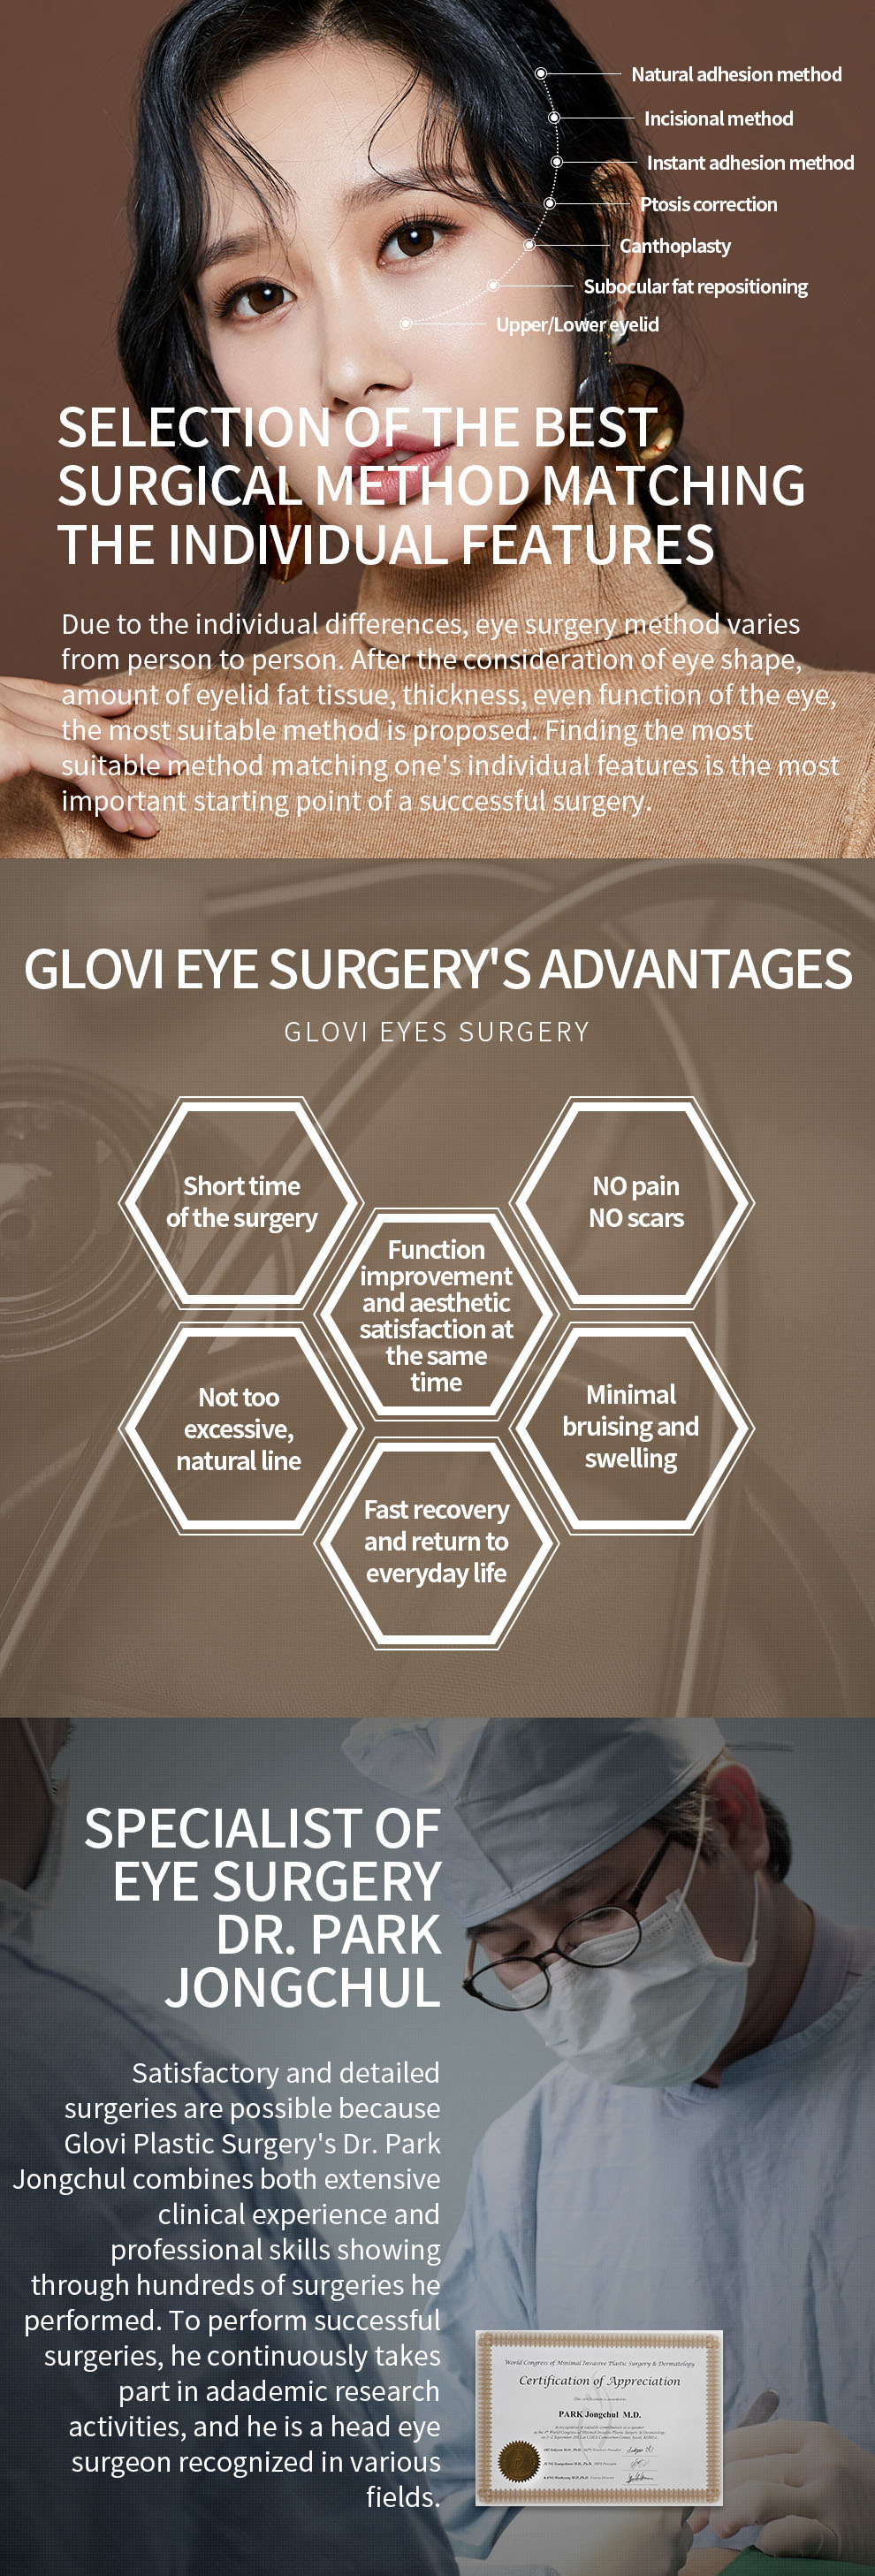 Glovi eye surgery img